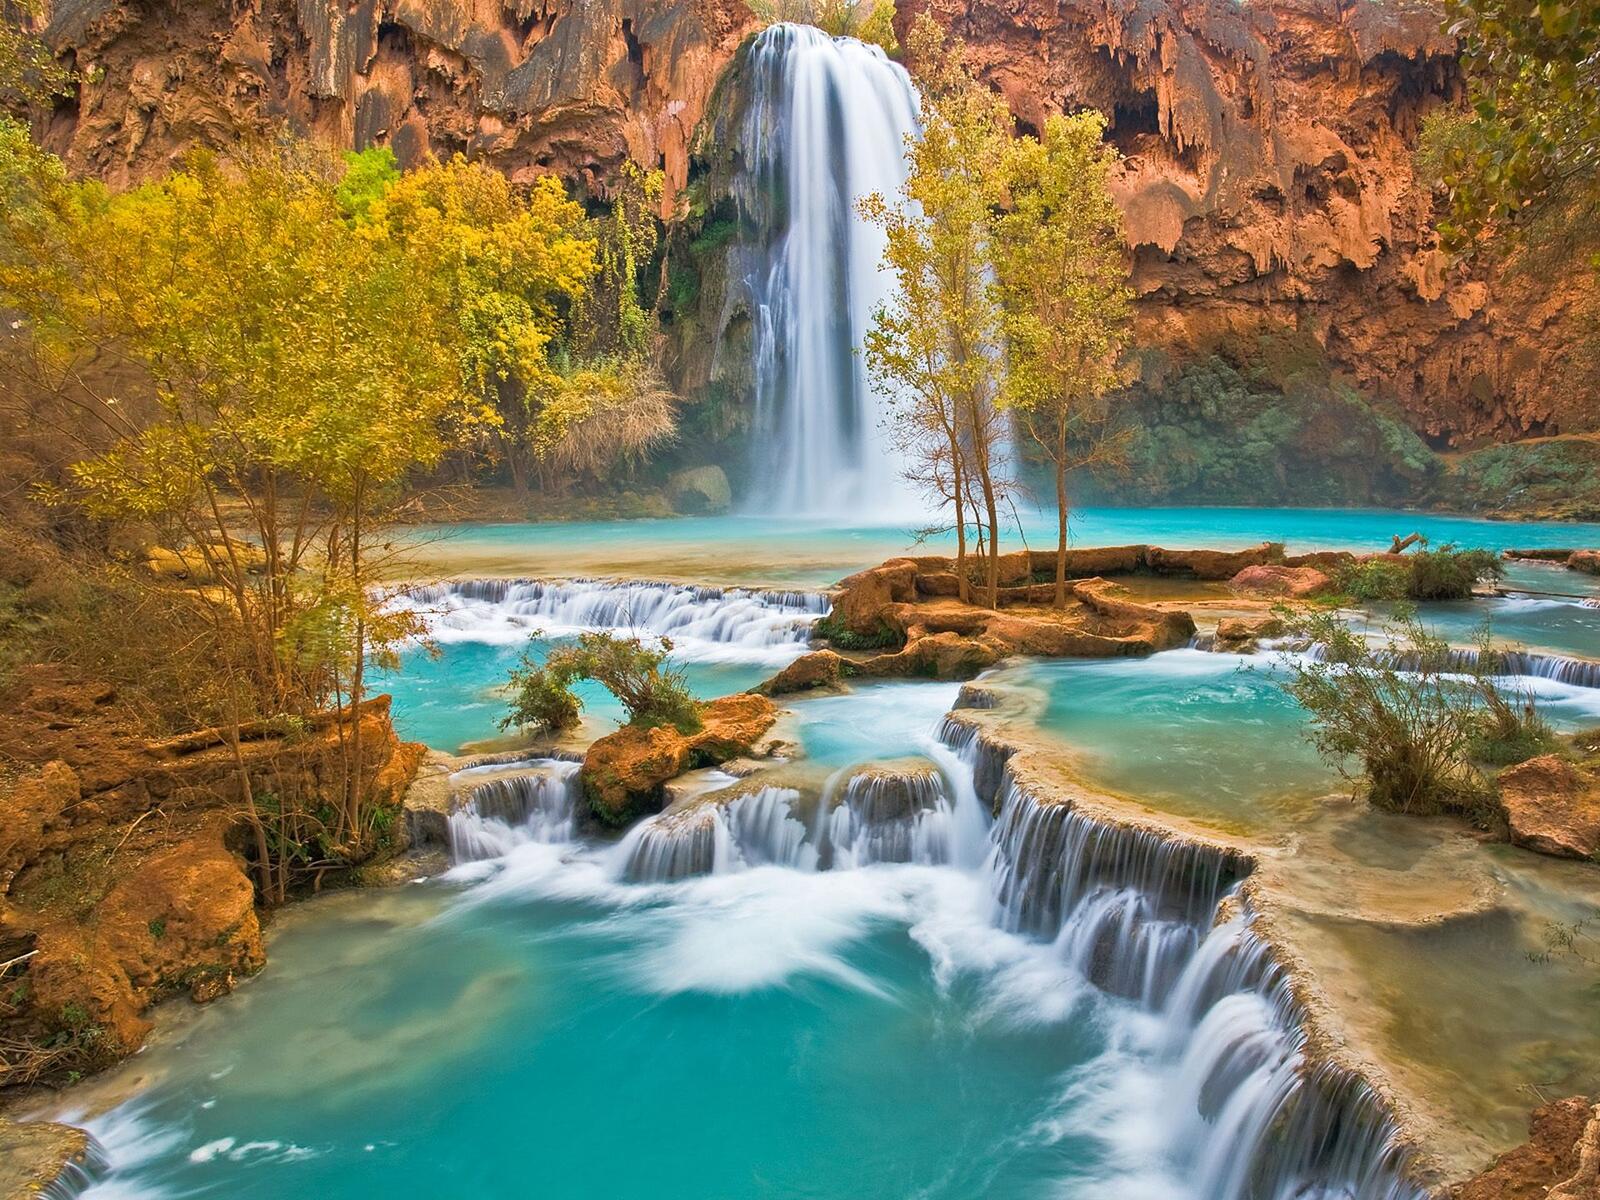 Wallpapers Havasu Falls in Havasu Canyon Arizona fall on the desktop